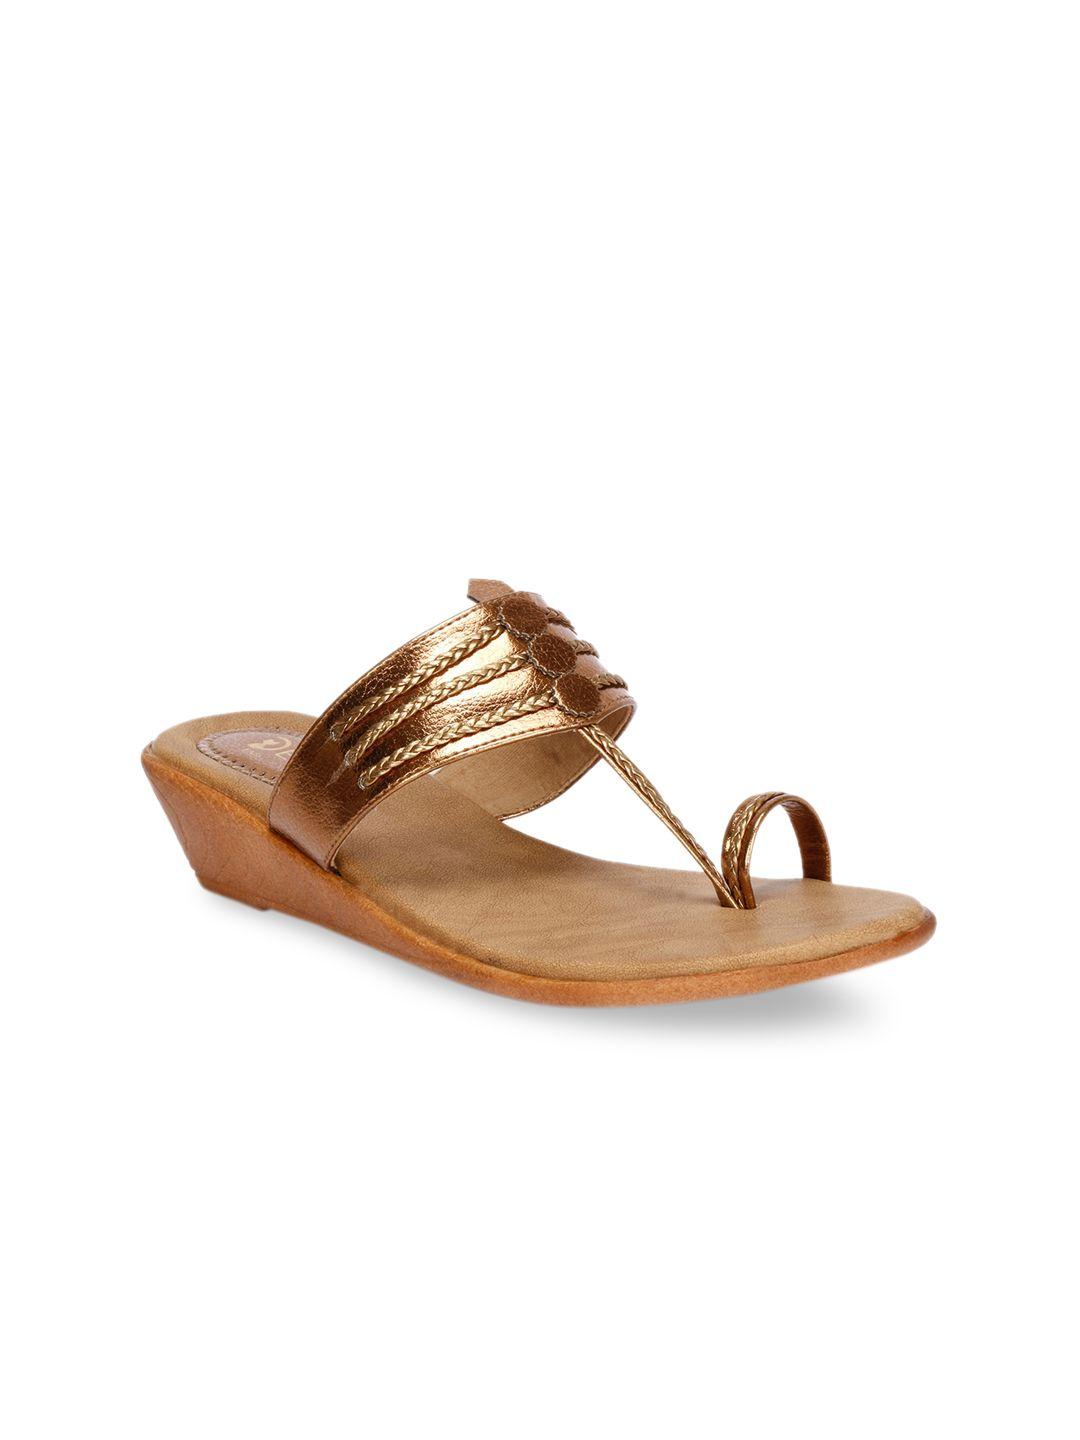 denill copper-toned wedge sandals